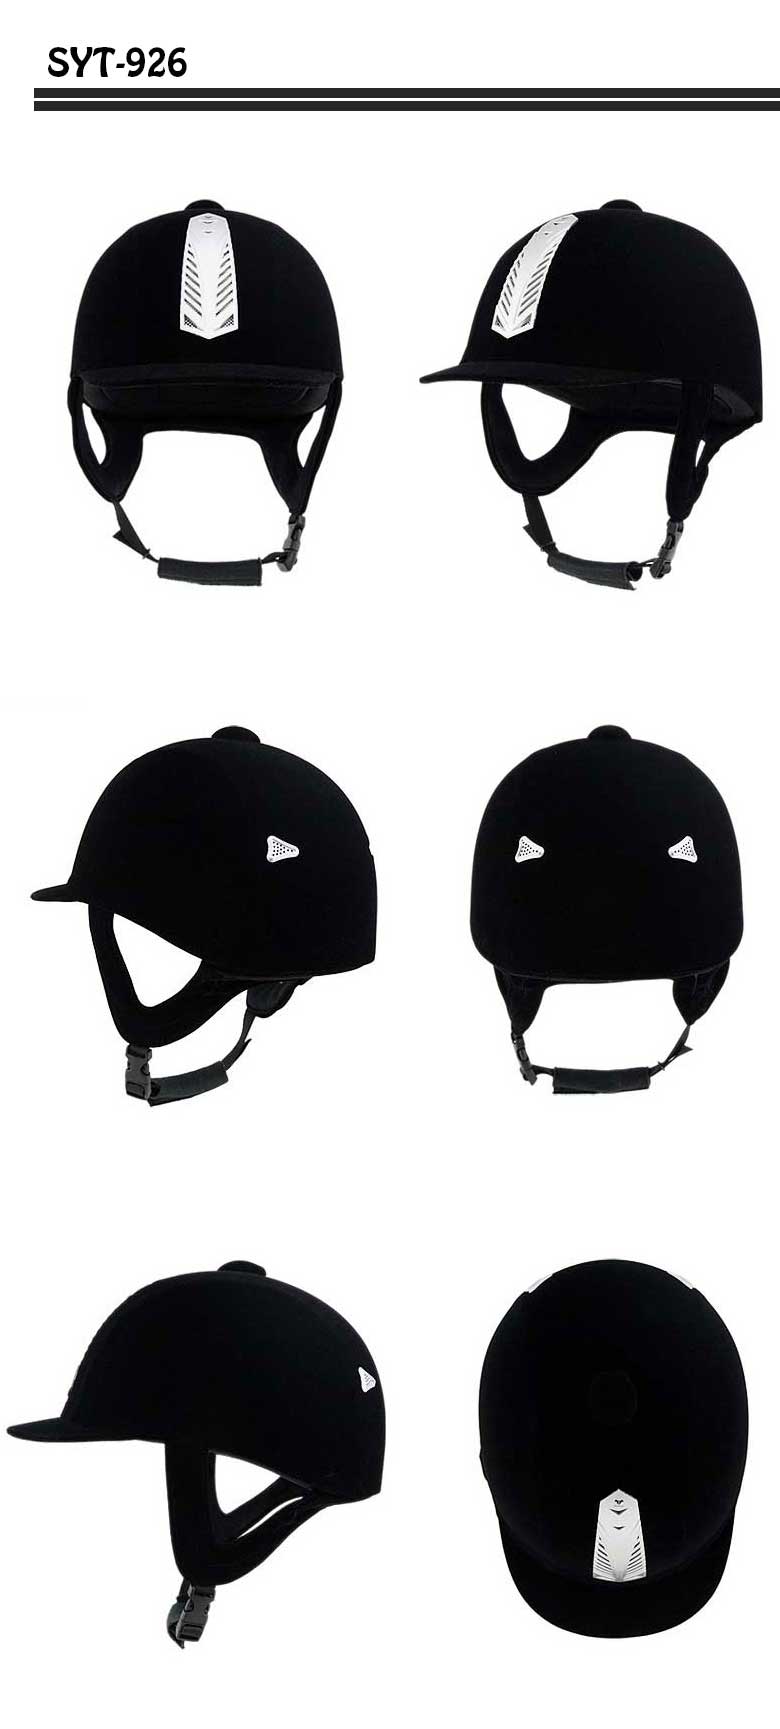 Velvet Equestrian Horse Riding Helmet Sport Safety Protection Gear Hats Kit